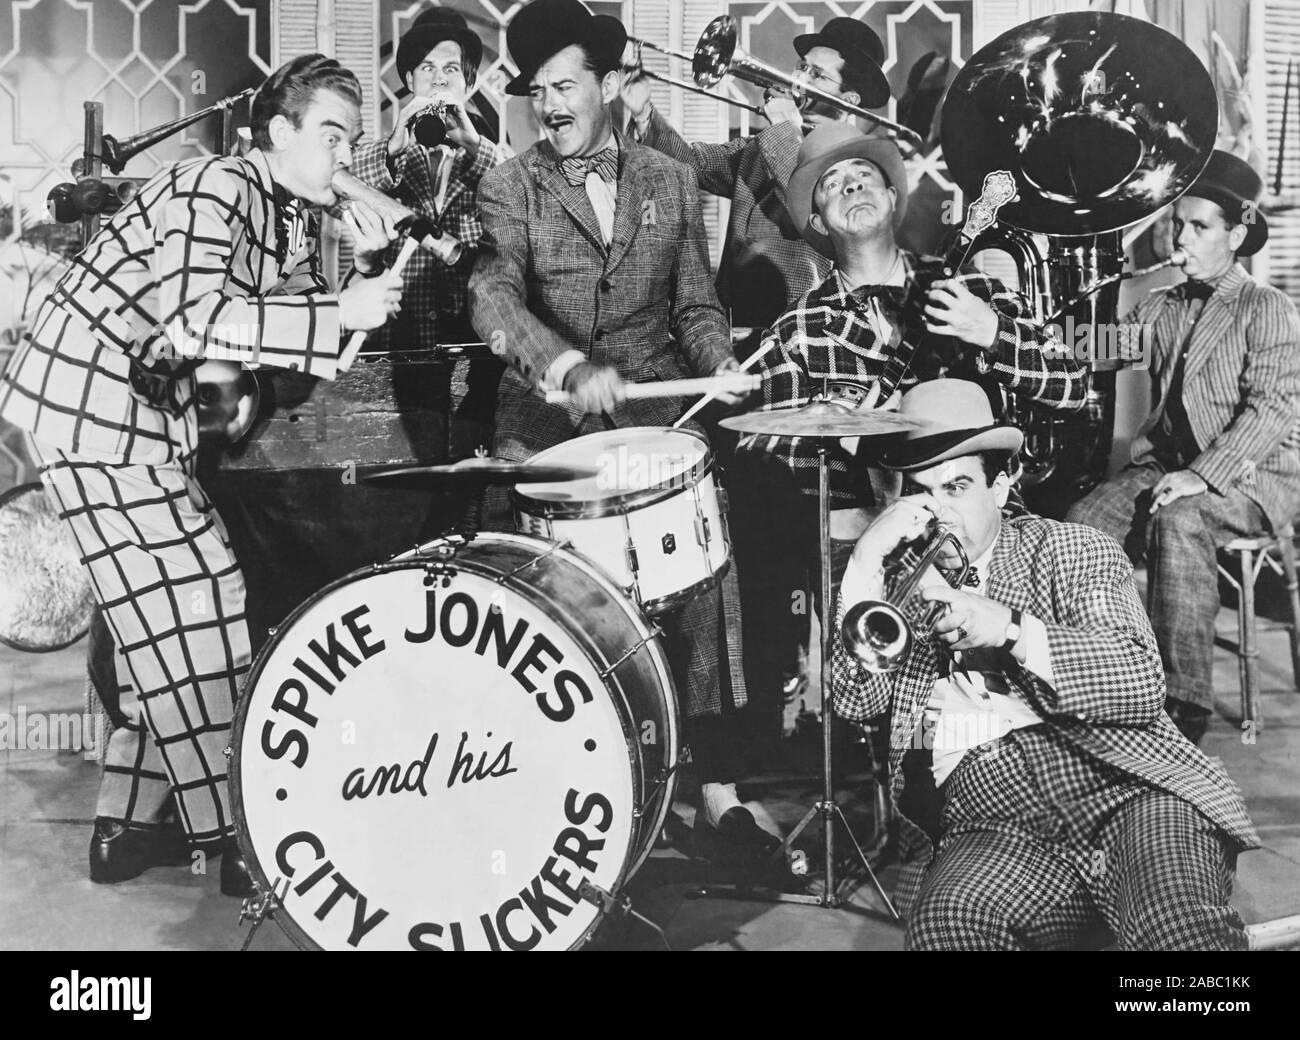 BREAKFAST IN HOLLYWOOD, Spike Jones and his City Slickers, Spike Jones  (standing left), George Rock (seated front), Freddy Morgan (behind Rock),  1946 Stock Photo - Alamy